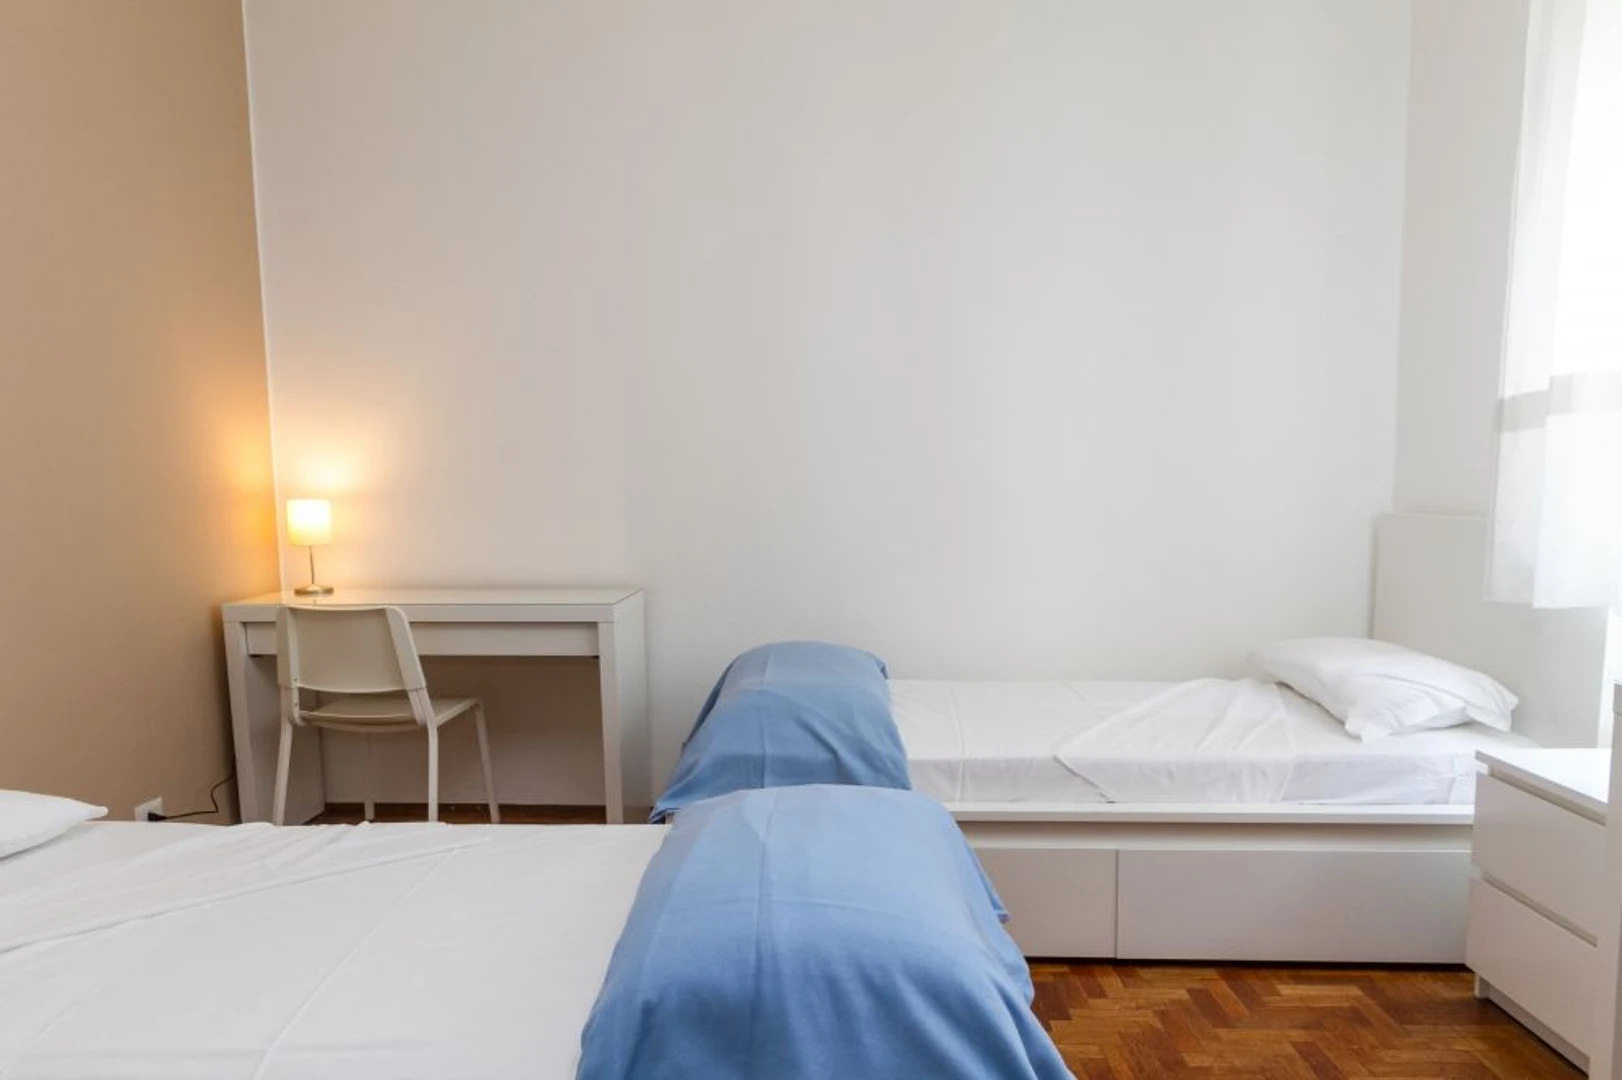 Shared room in 3-bedroom flat milano